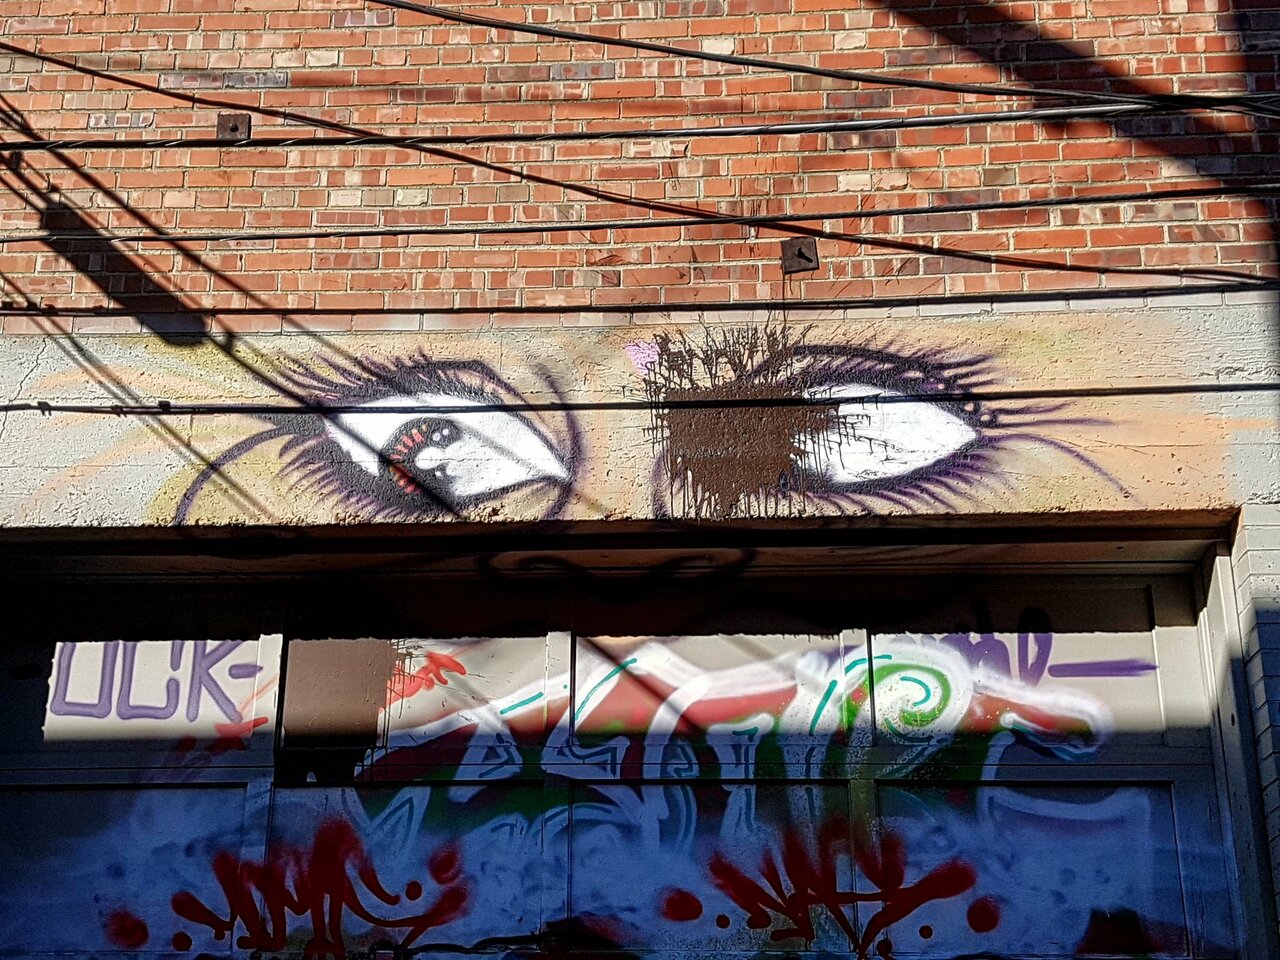 A black eye (Billings) #art #streetart #graffiti #mural #painting #montana https://t.co/9owQtJ4wIu